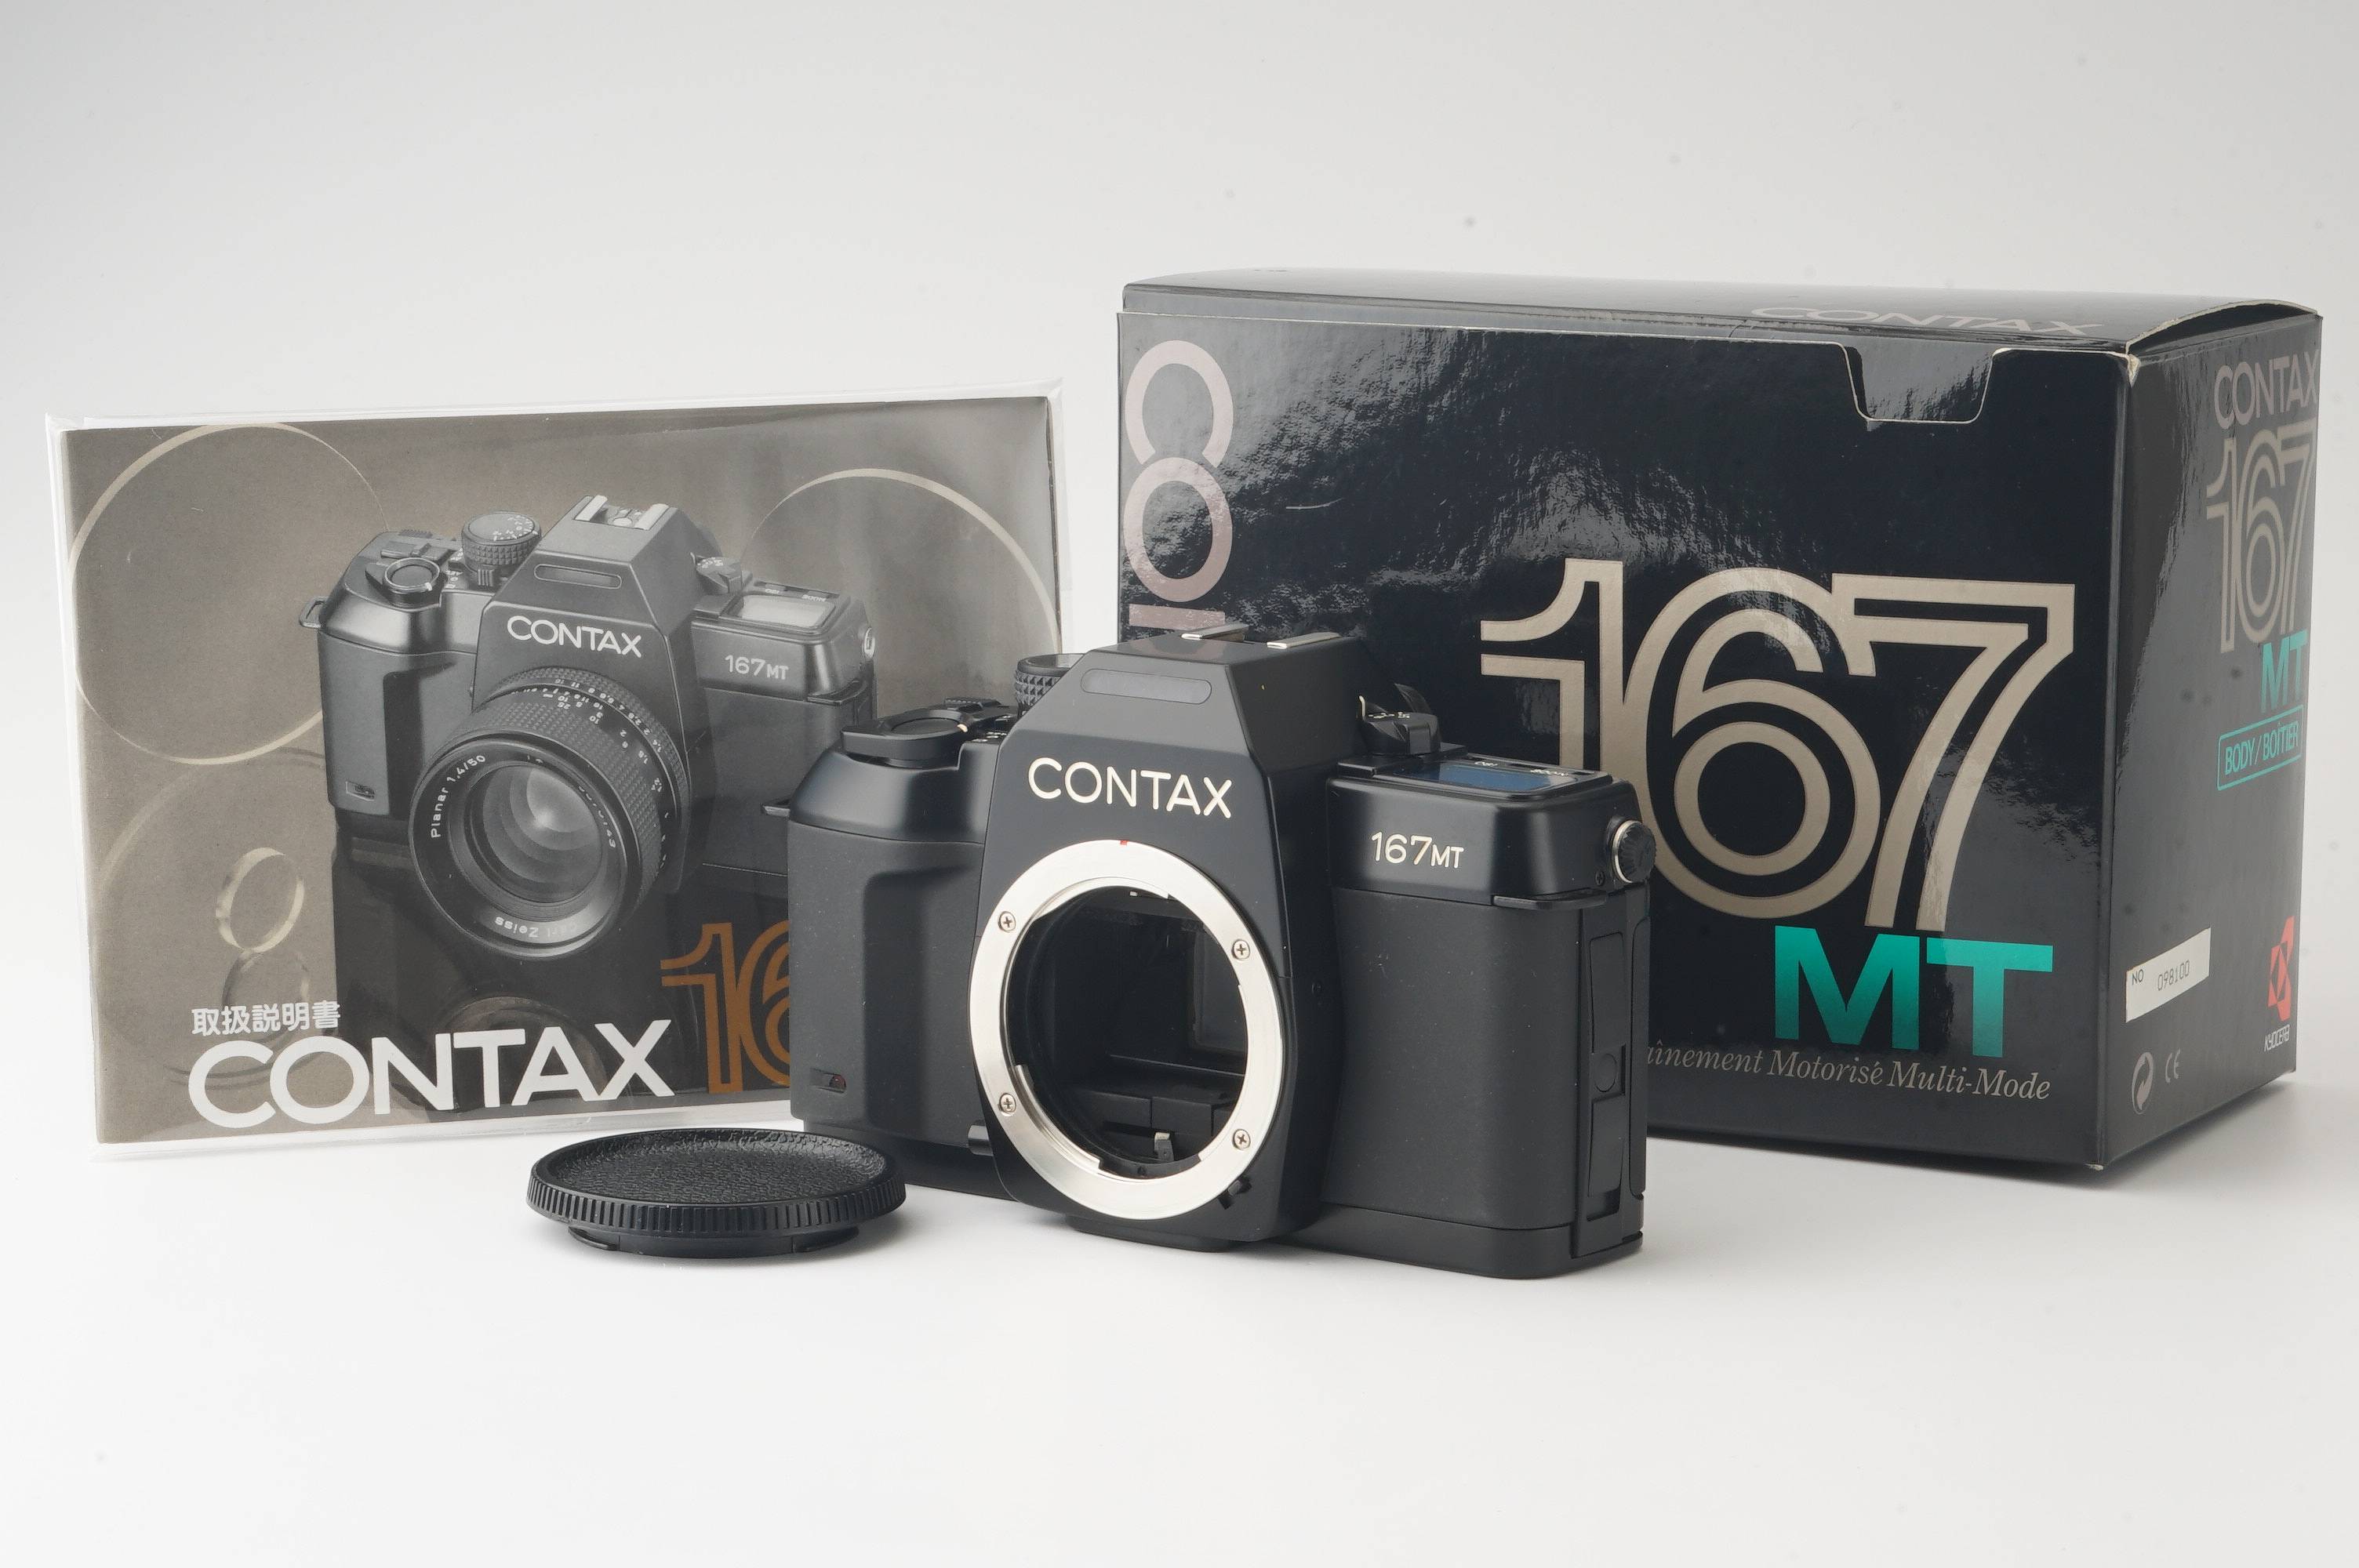 CONTAX 167MT 純正ストラップ付き - フィルムカメラ